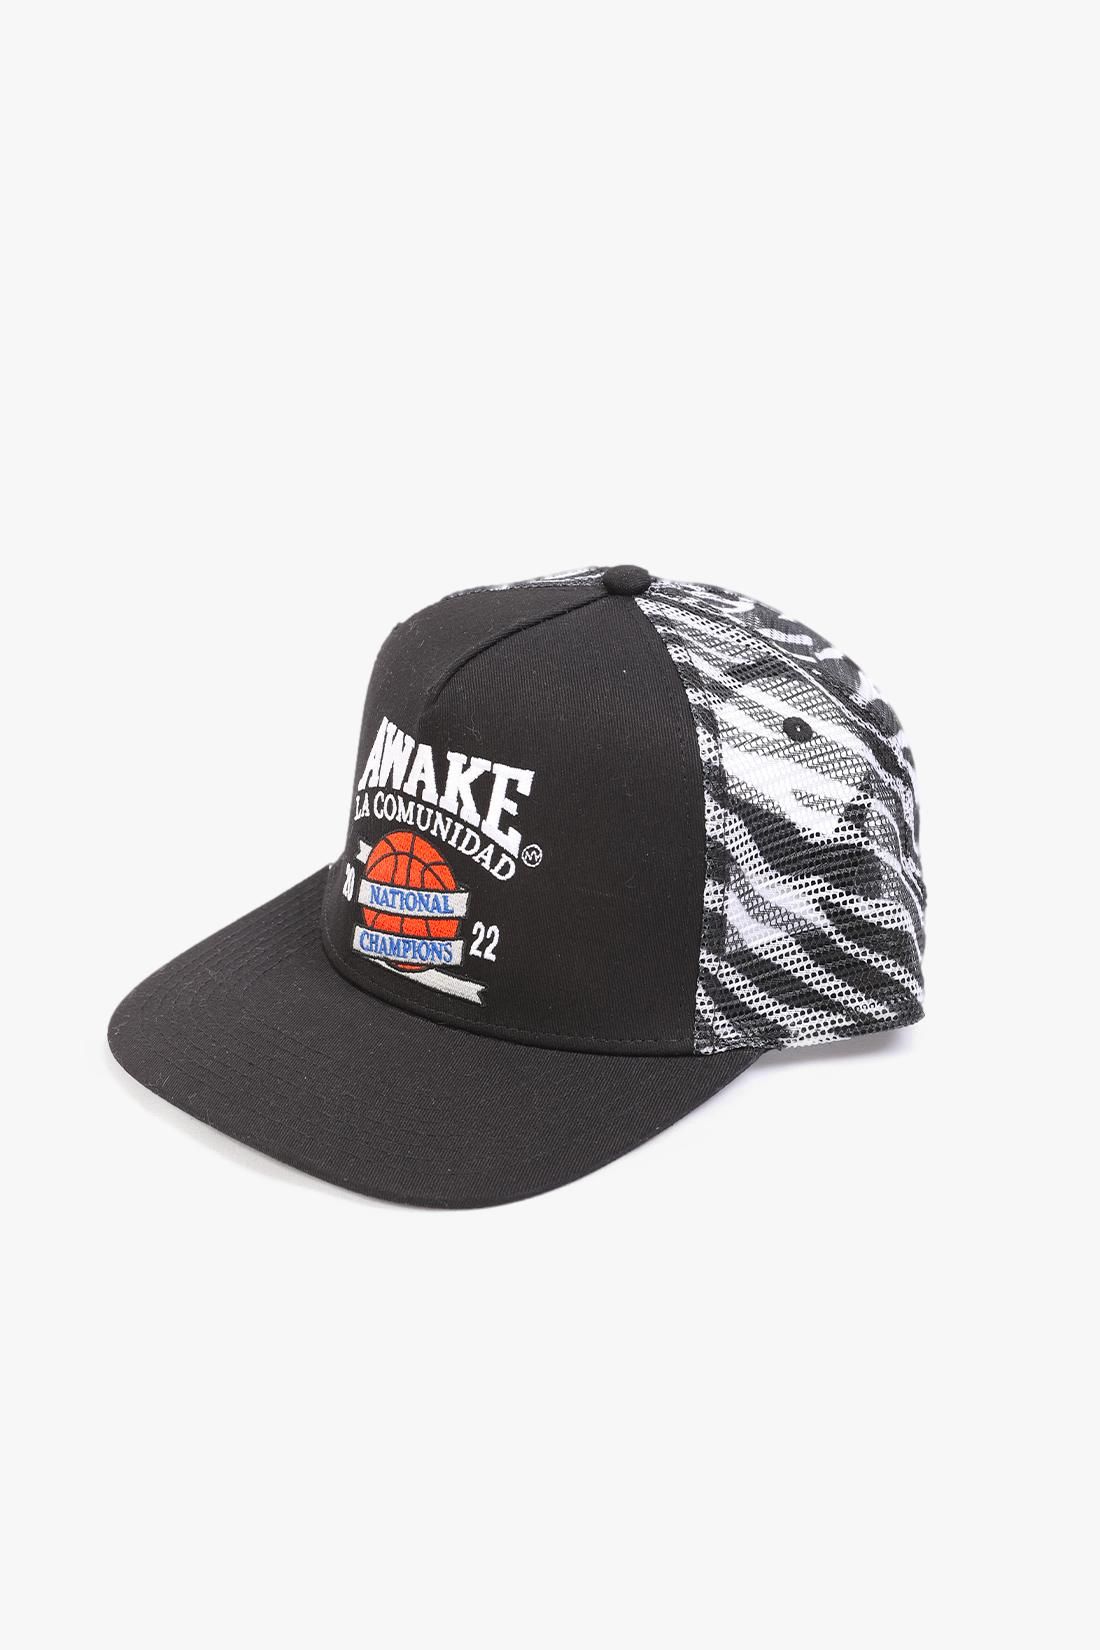 National champions trucker hat Black